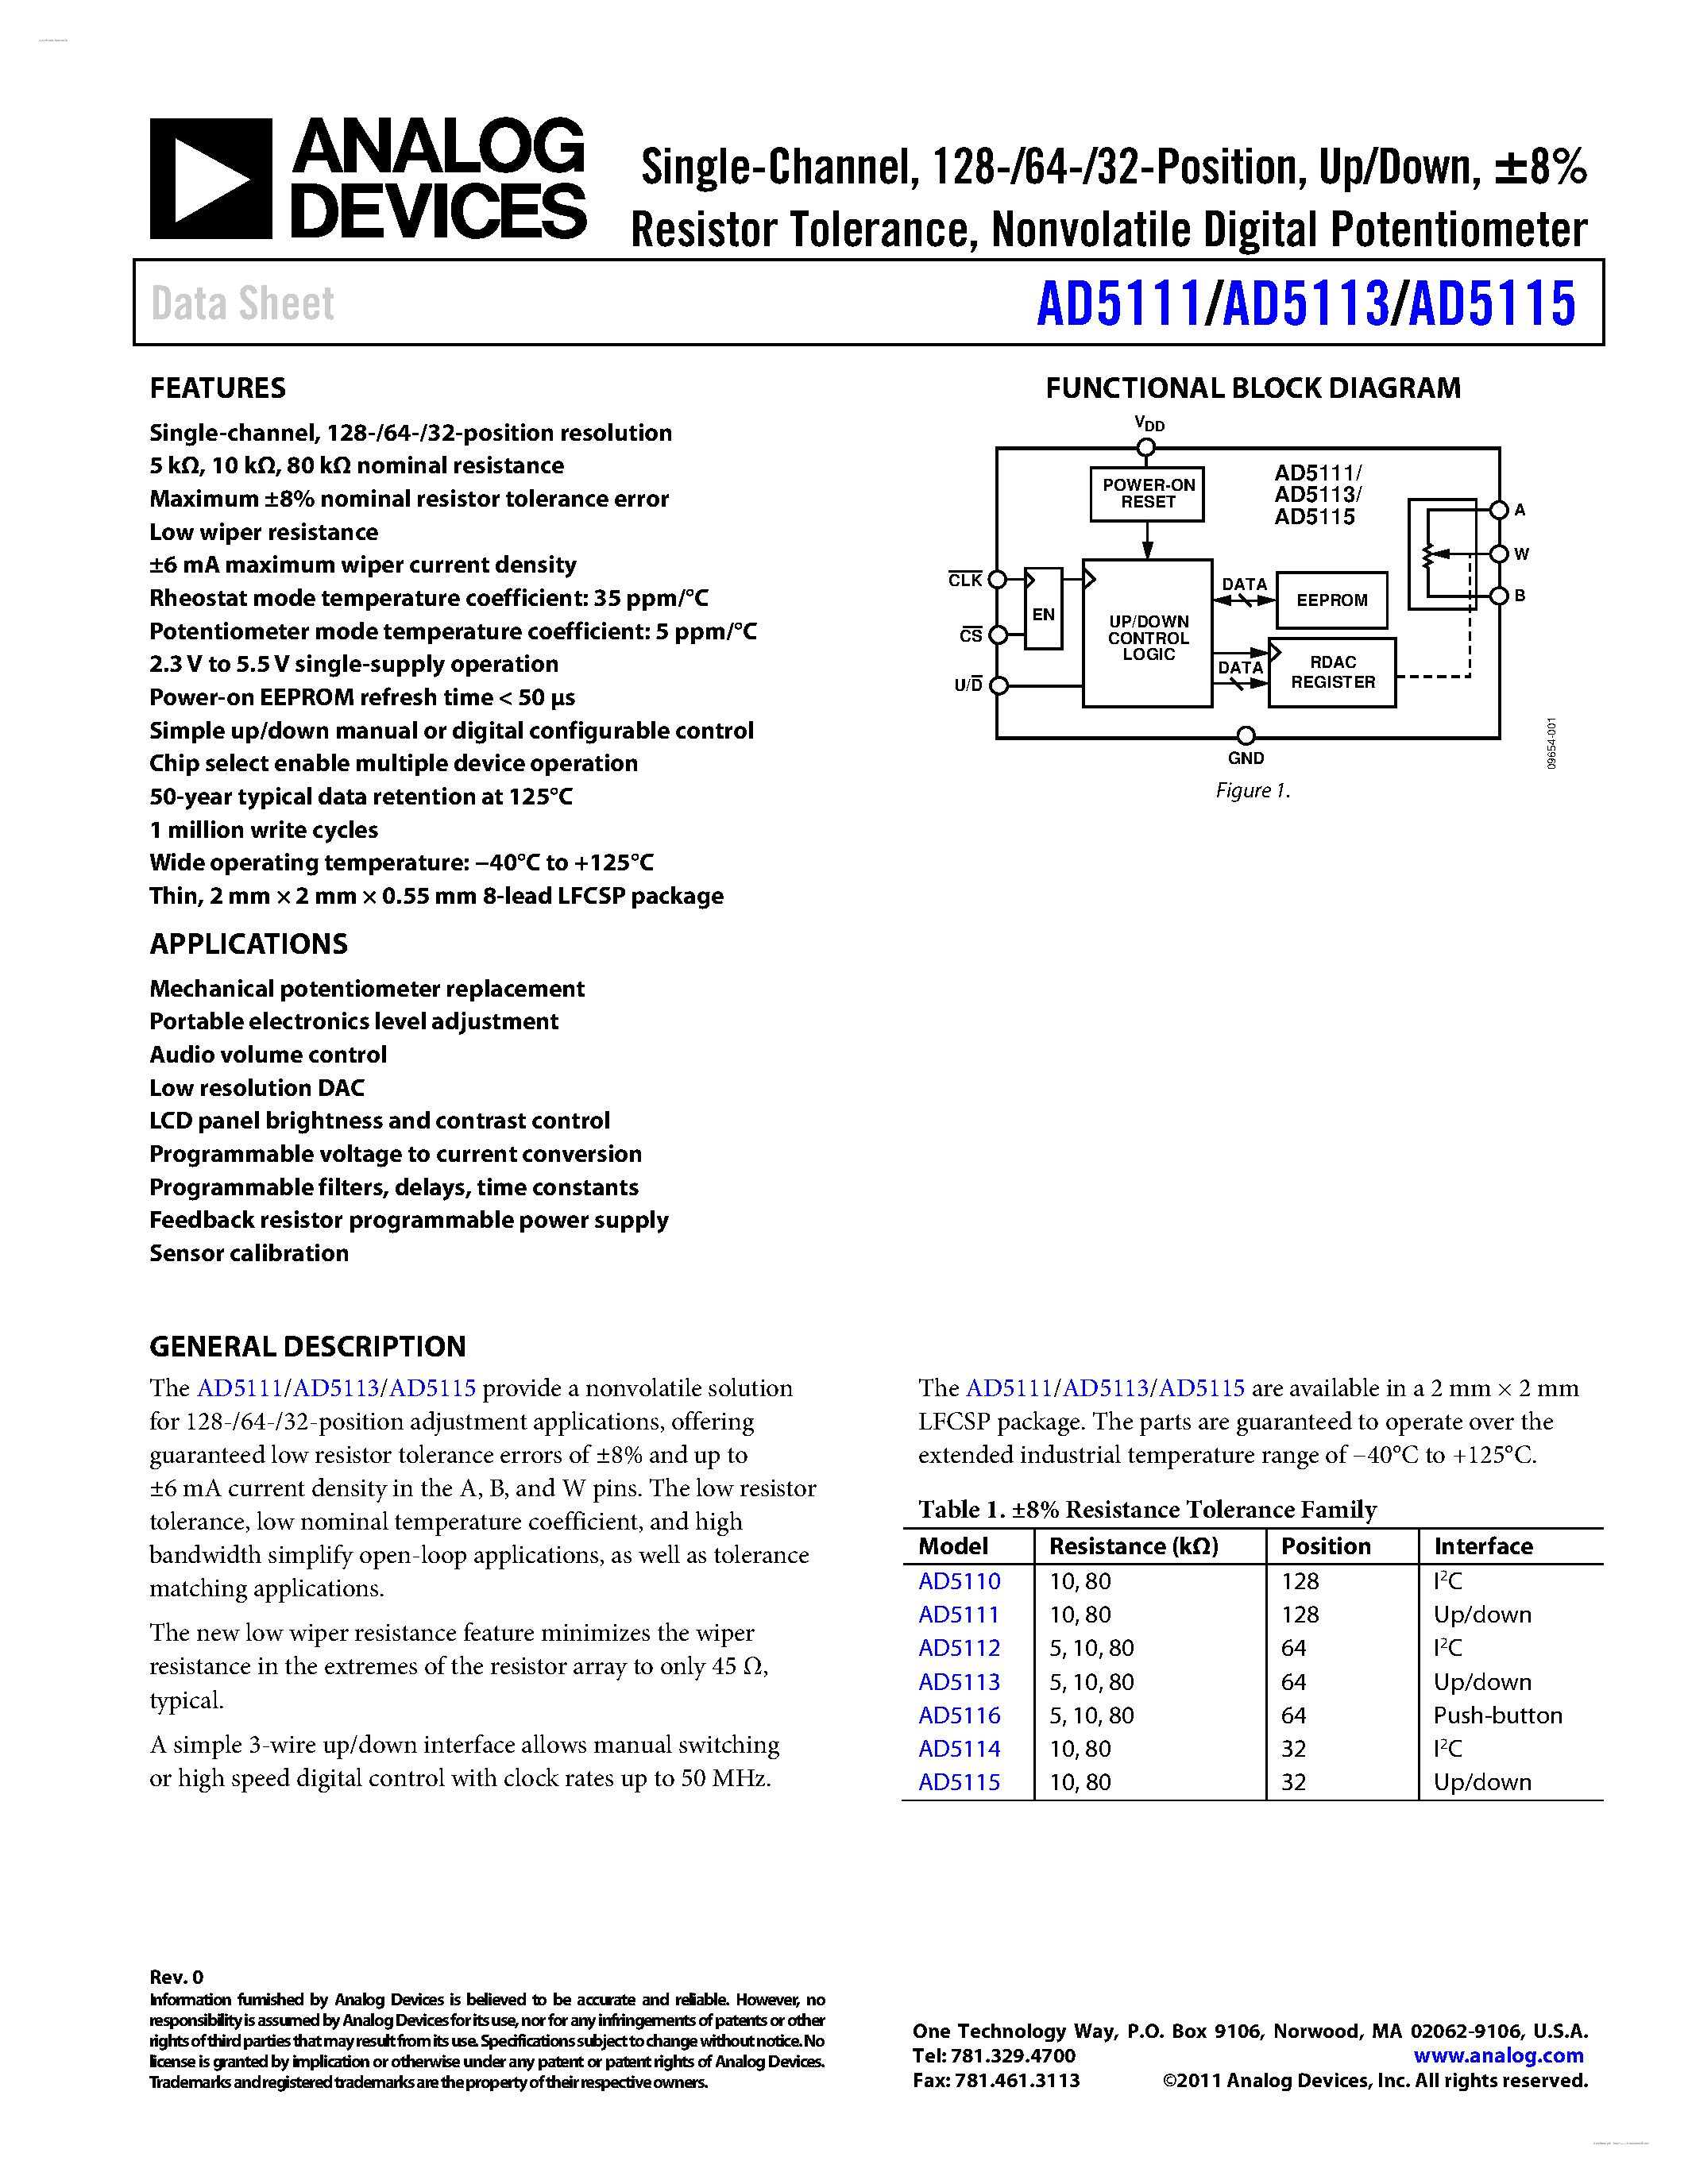 Datasheet AD5111 - (AD5111 - AD5115) Nonvolatile Digital Potentiometer page 1